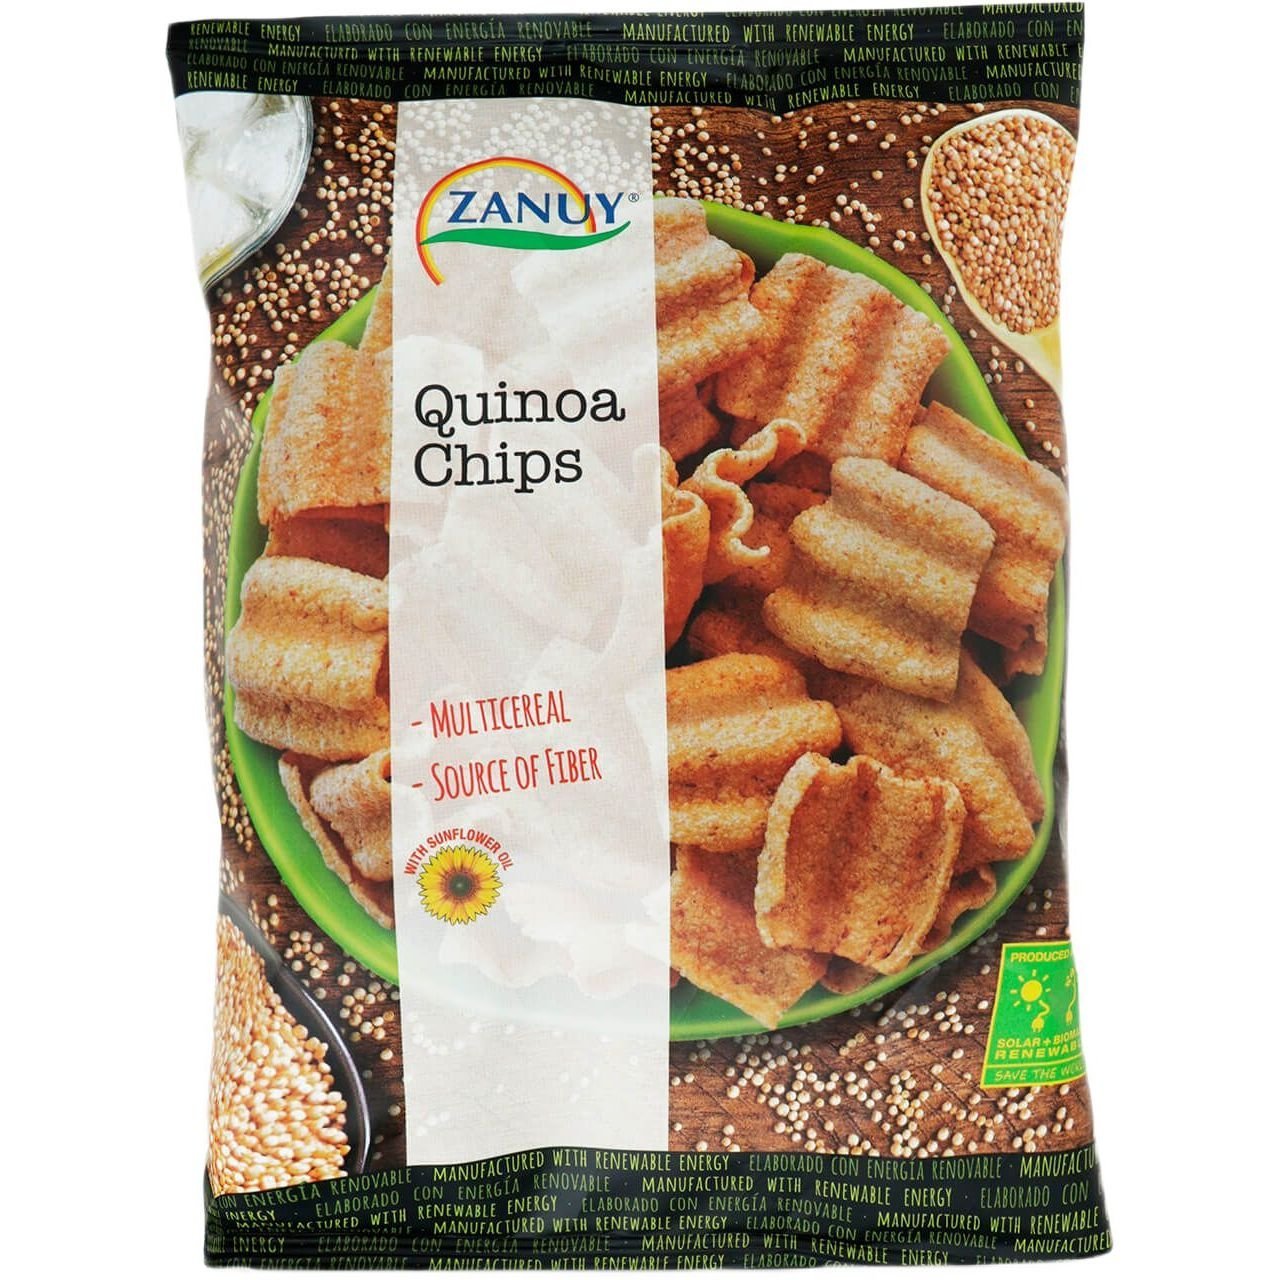 Снеки Zanuy Quinoa Chips мультизлаковые 65 г (746120) - фото 1